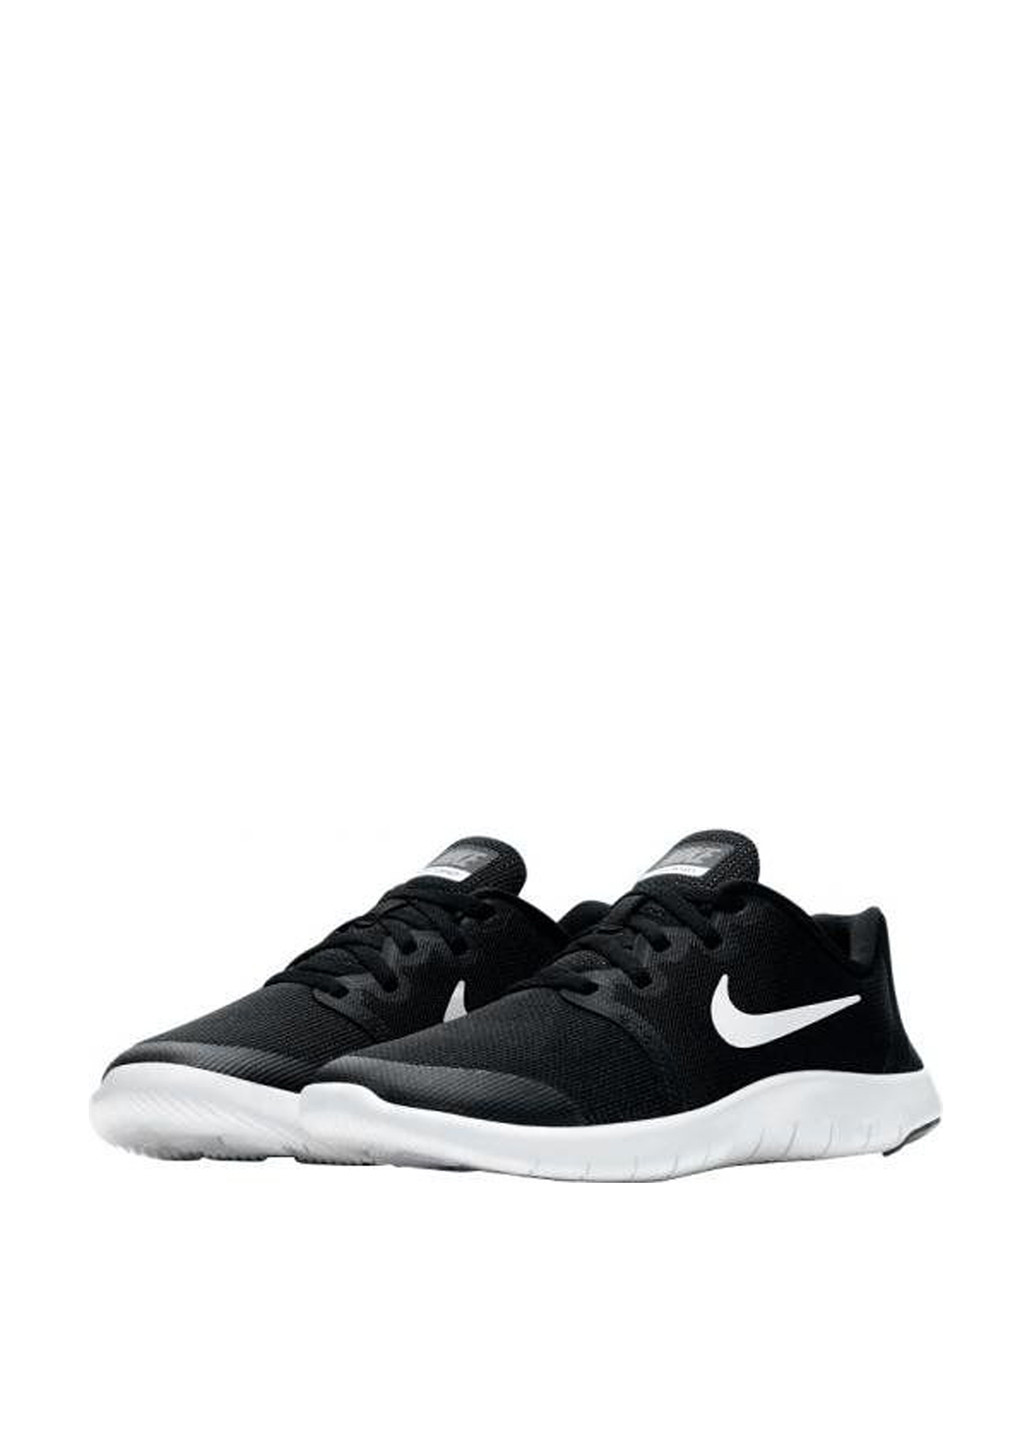 Чорні осінні кросівки Nike WMNS NIKE FLEX CONTACT 2 AS